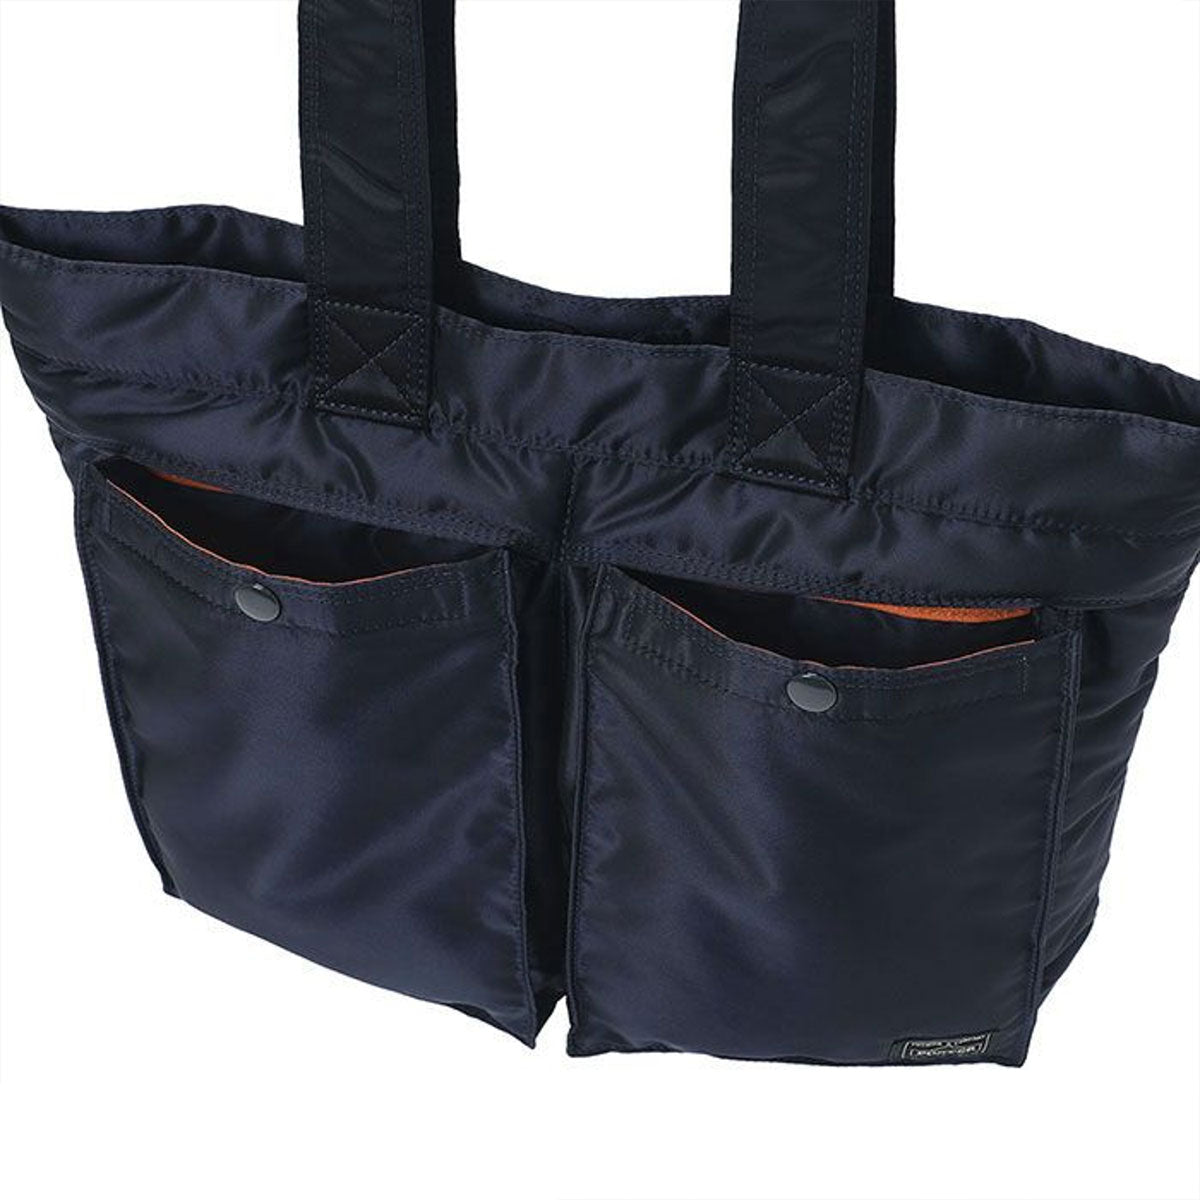 PORTER-YOSHIDA & CO Tanker 2Way Nylon Tote Bag for Men